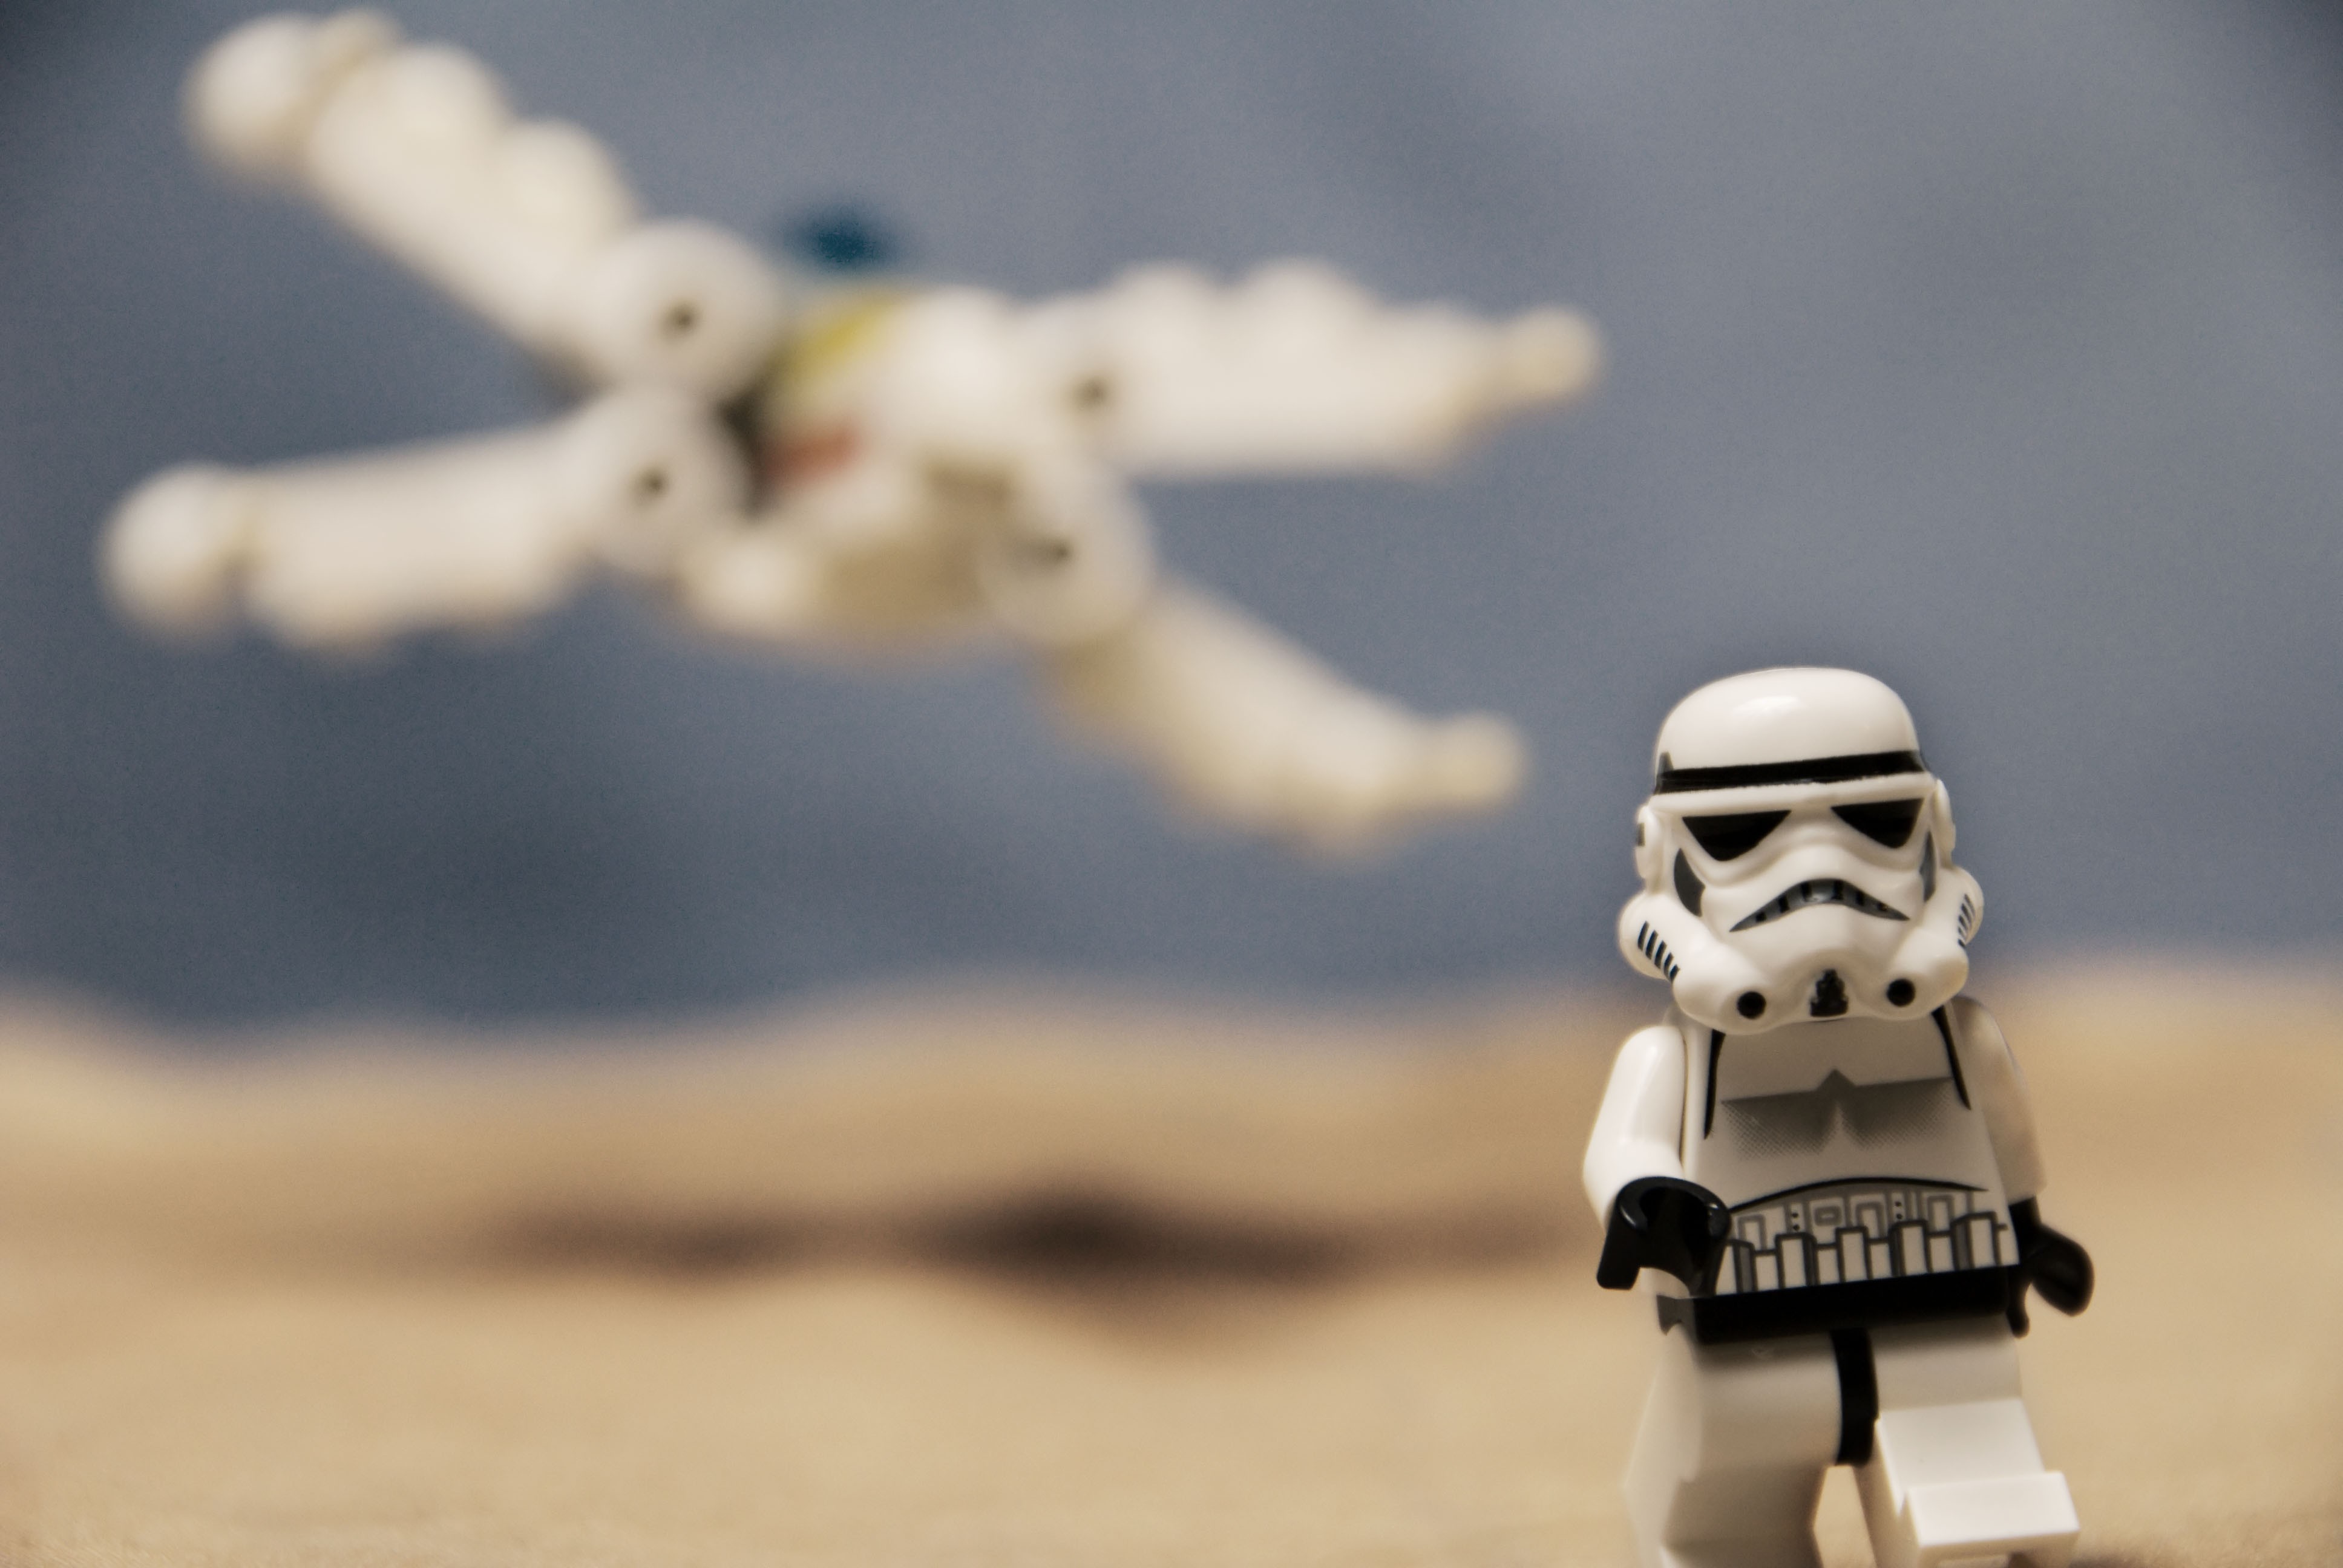 General 3872x2592 Star Wars toys LEGO stormtrooper figurines helmet blurred movie characters